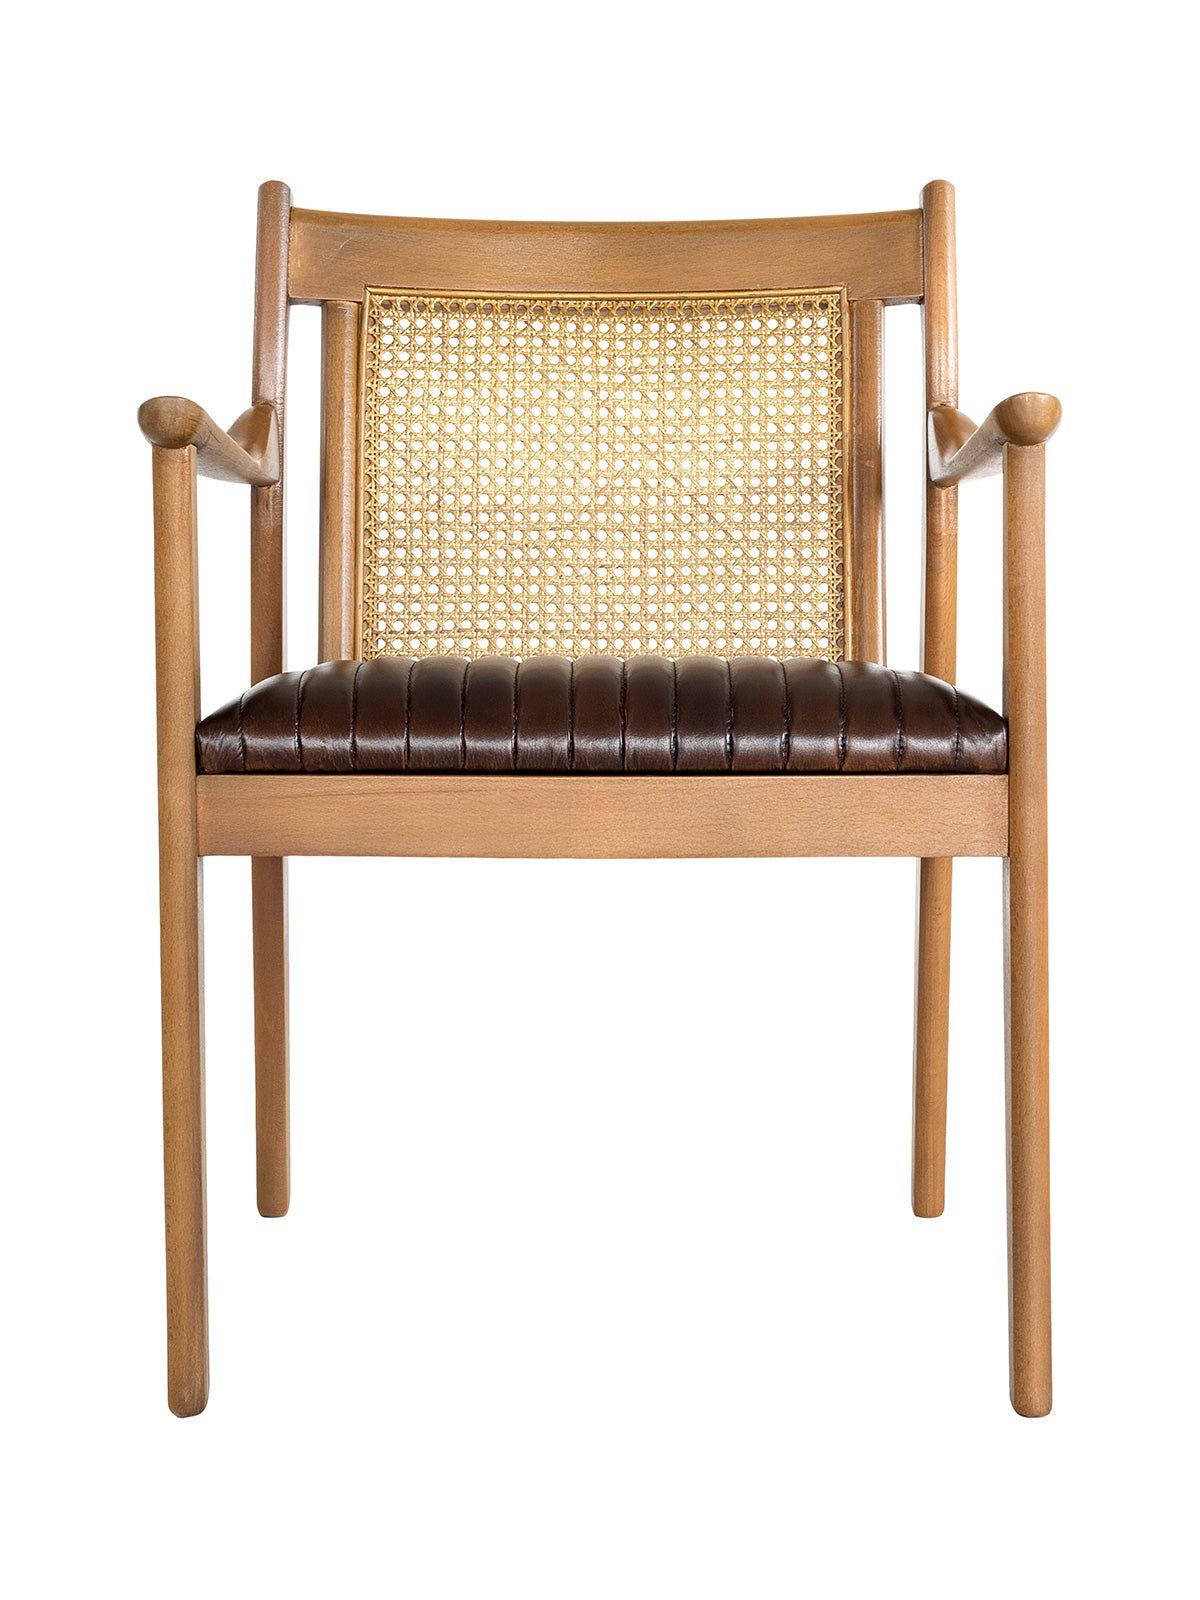 Moderner Stuhl aus Buchenholz ✔ Modell CIRO